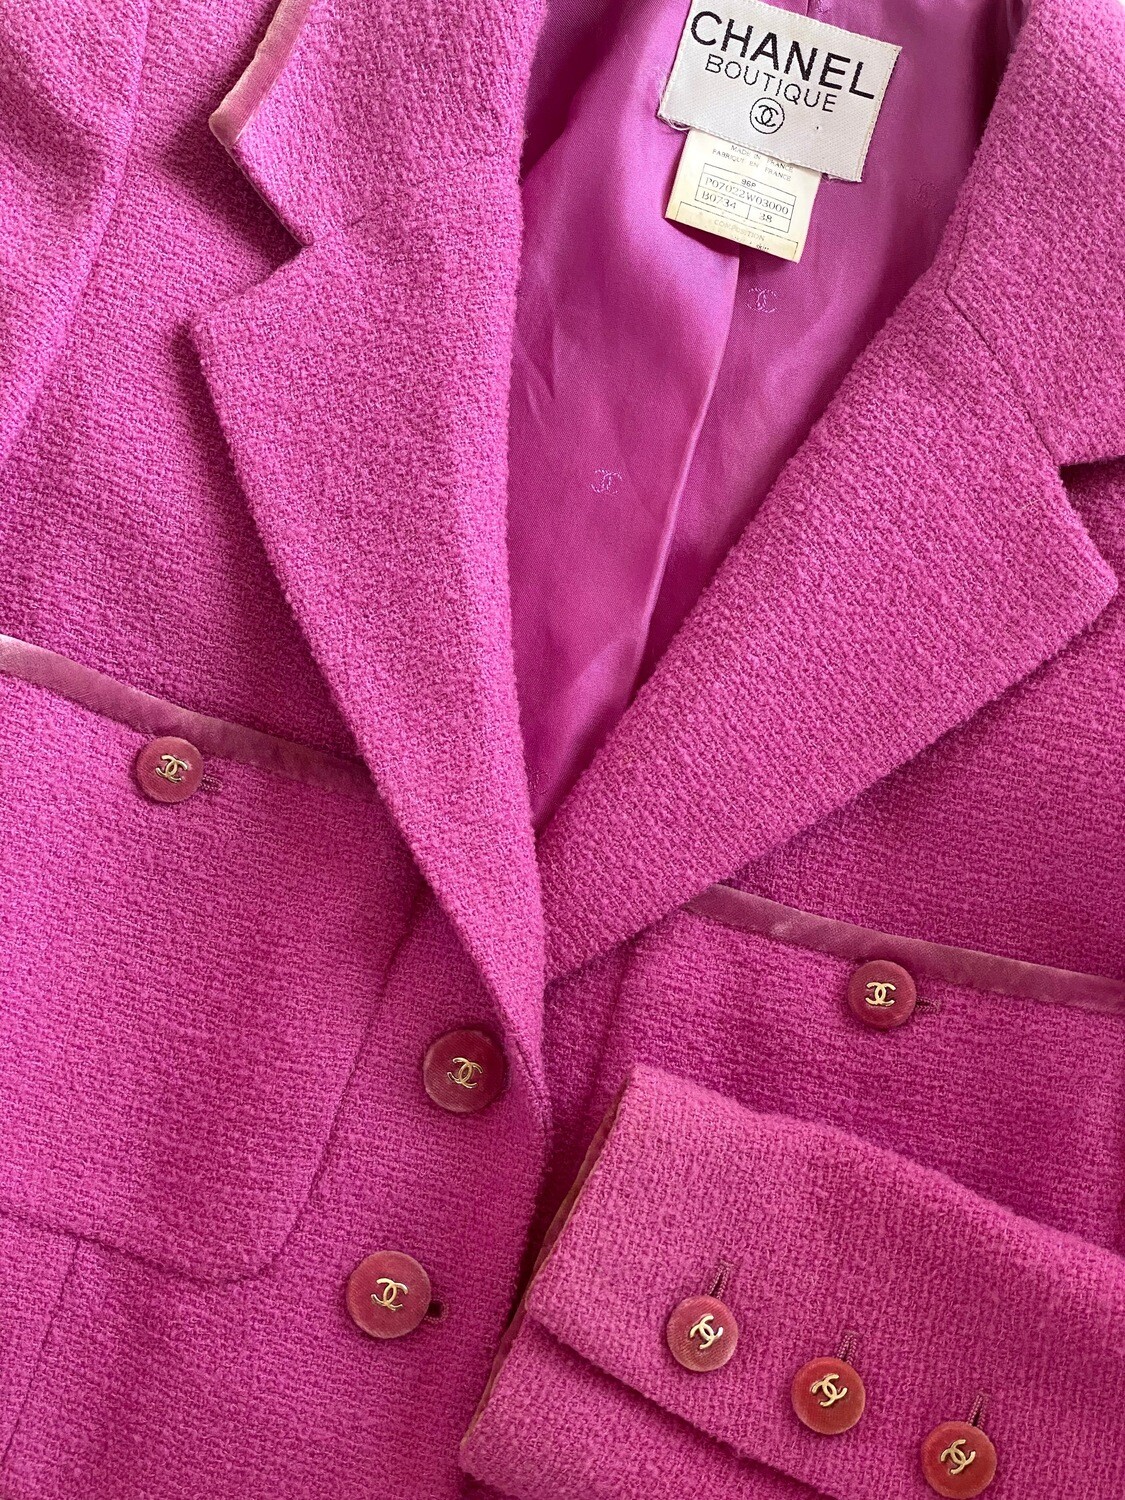 classic chanel jacket 36